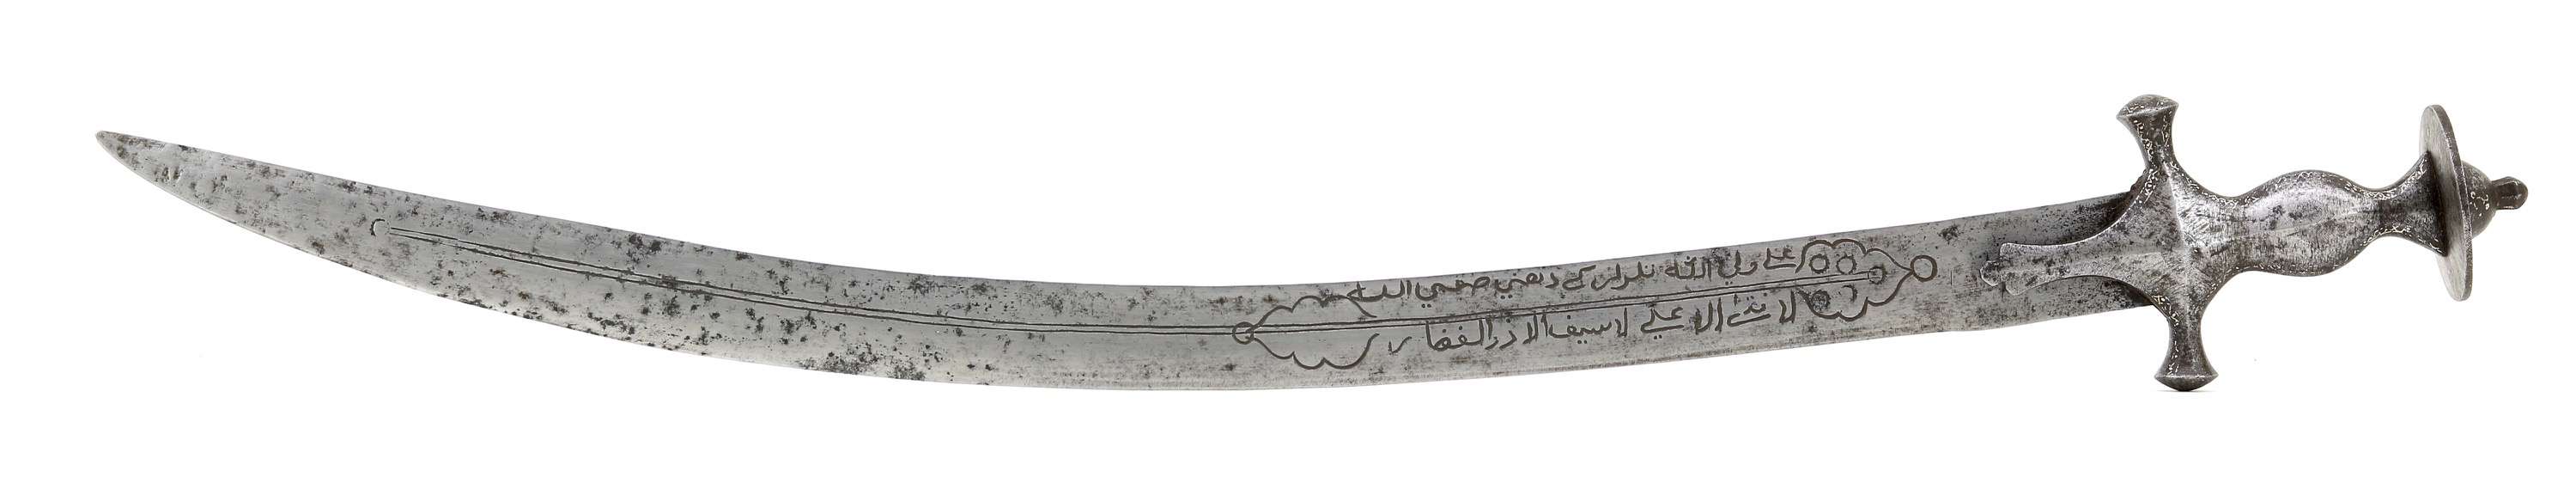 Talwar with Mamluk style blade chiseling